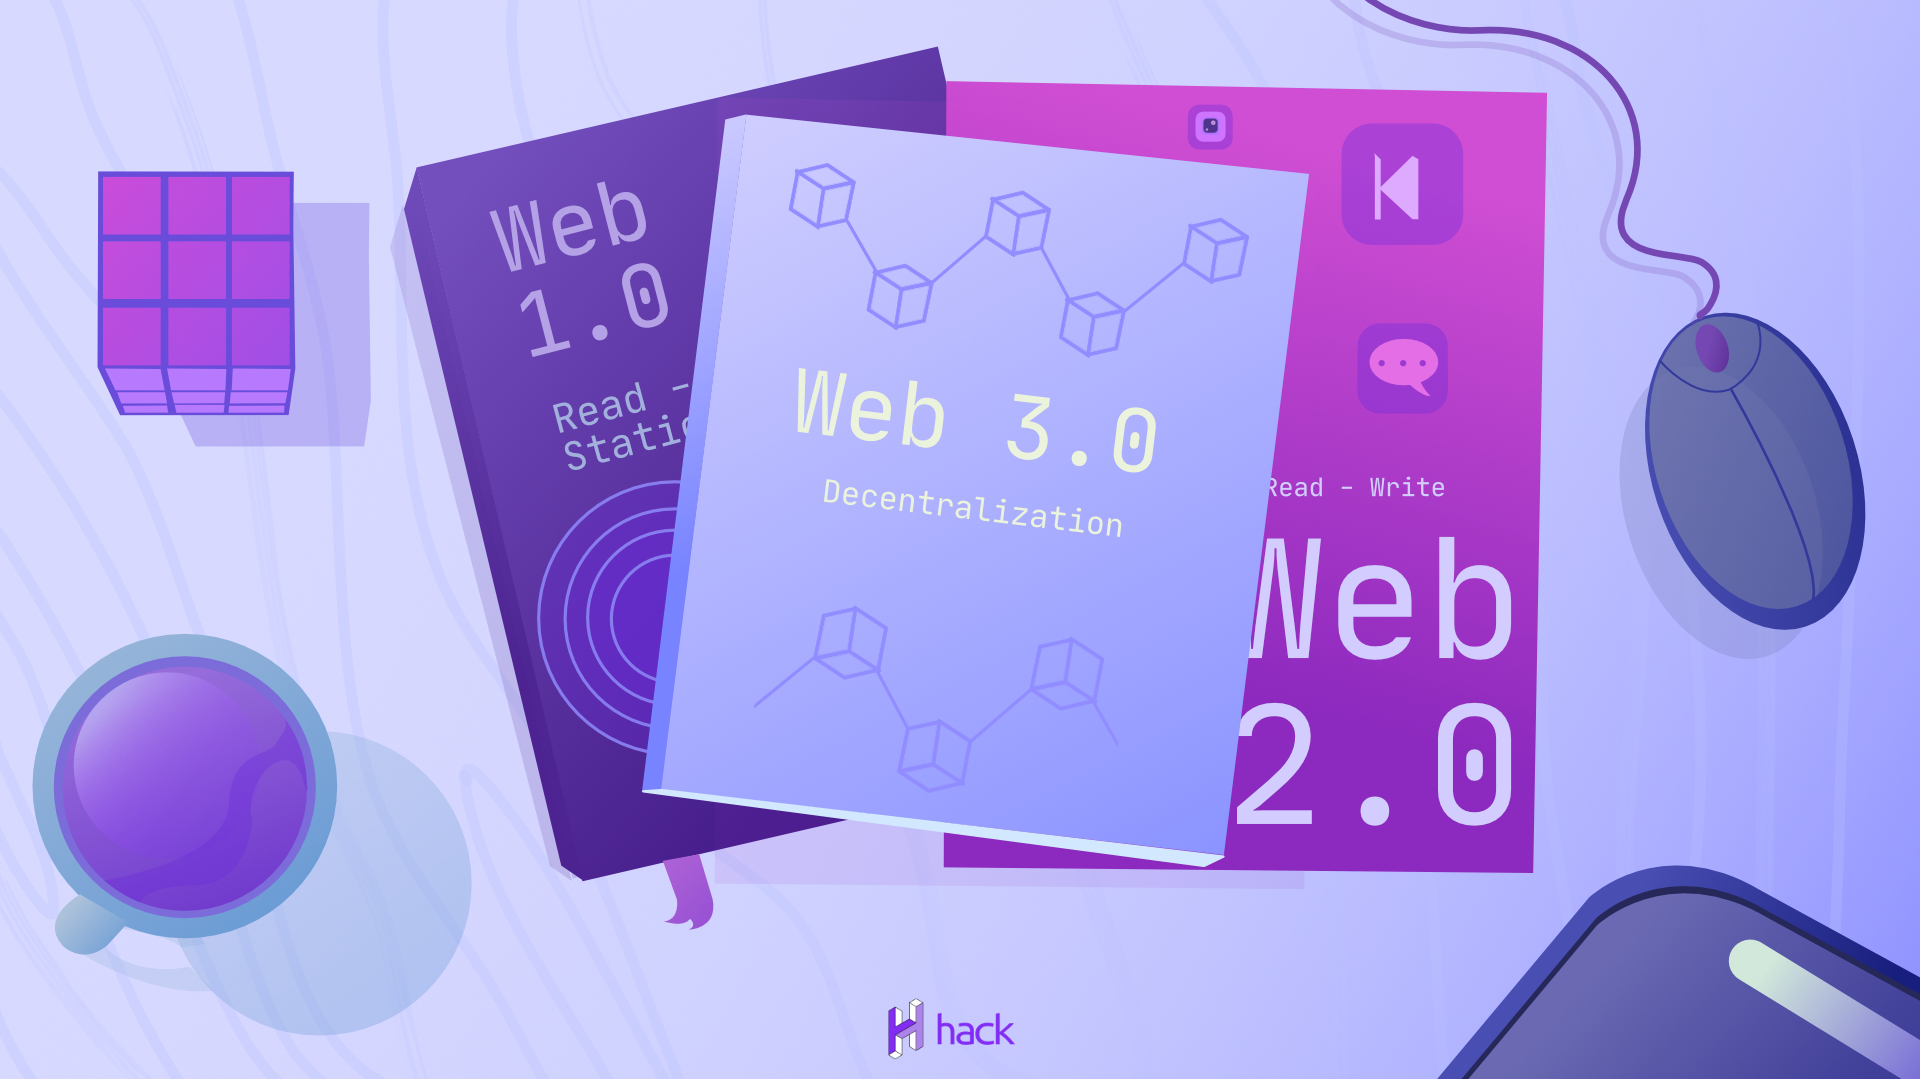 Web 1.0; Web 2.0; Web 3.0 - Evolution of the net 1